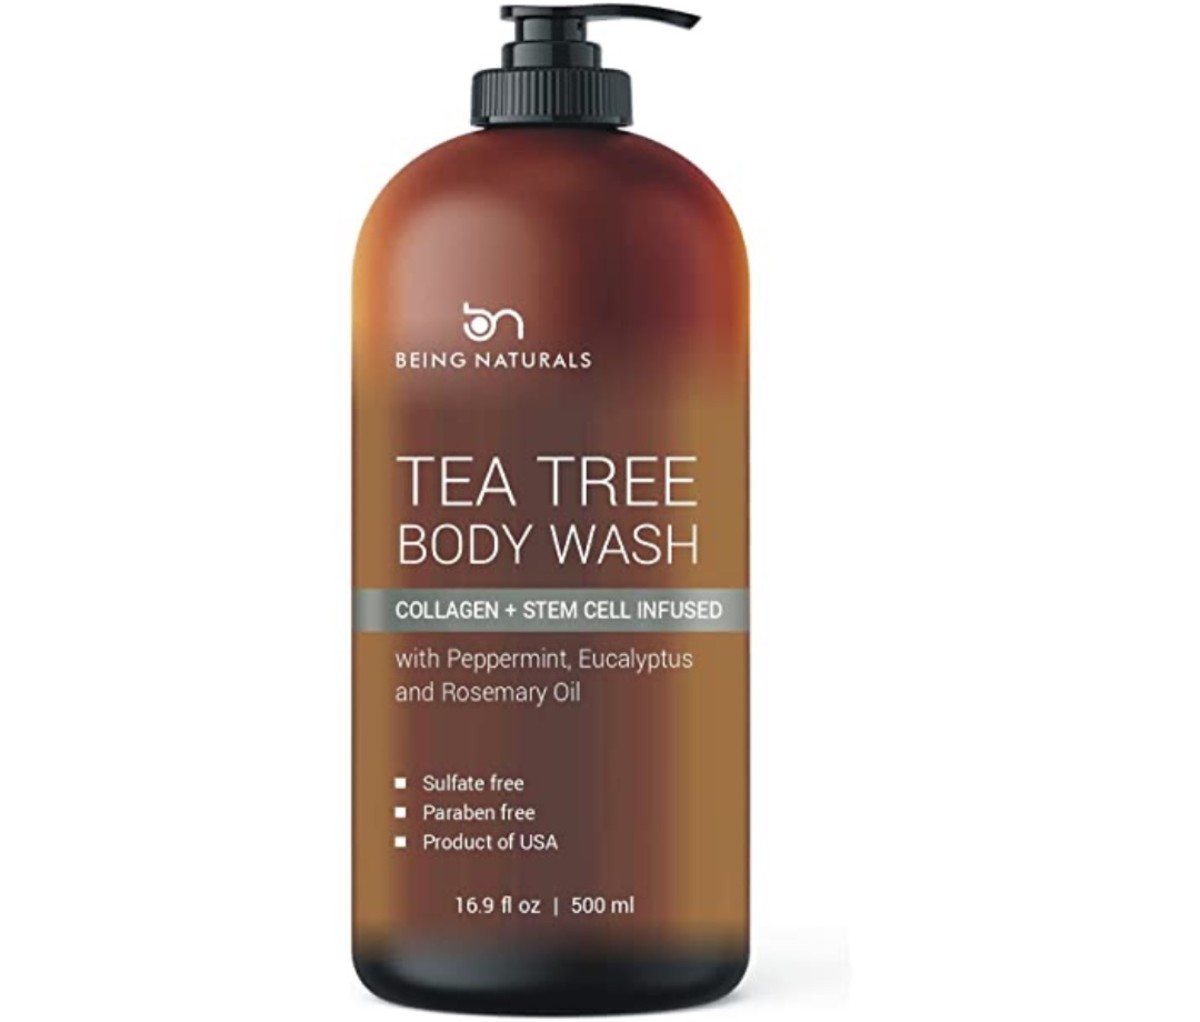 Being Naturals Tea Tree Body Wash